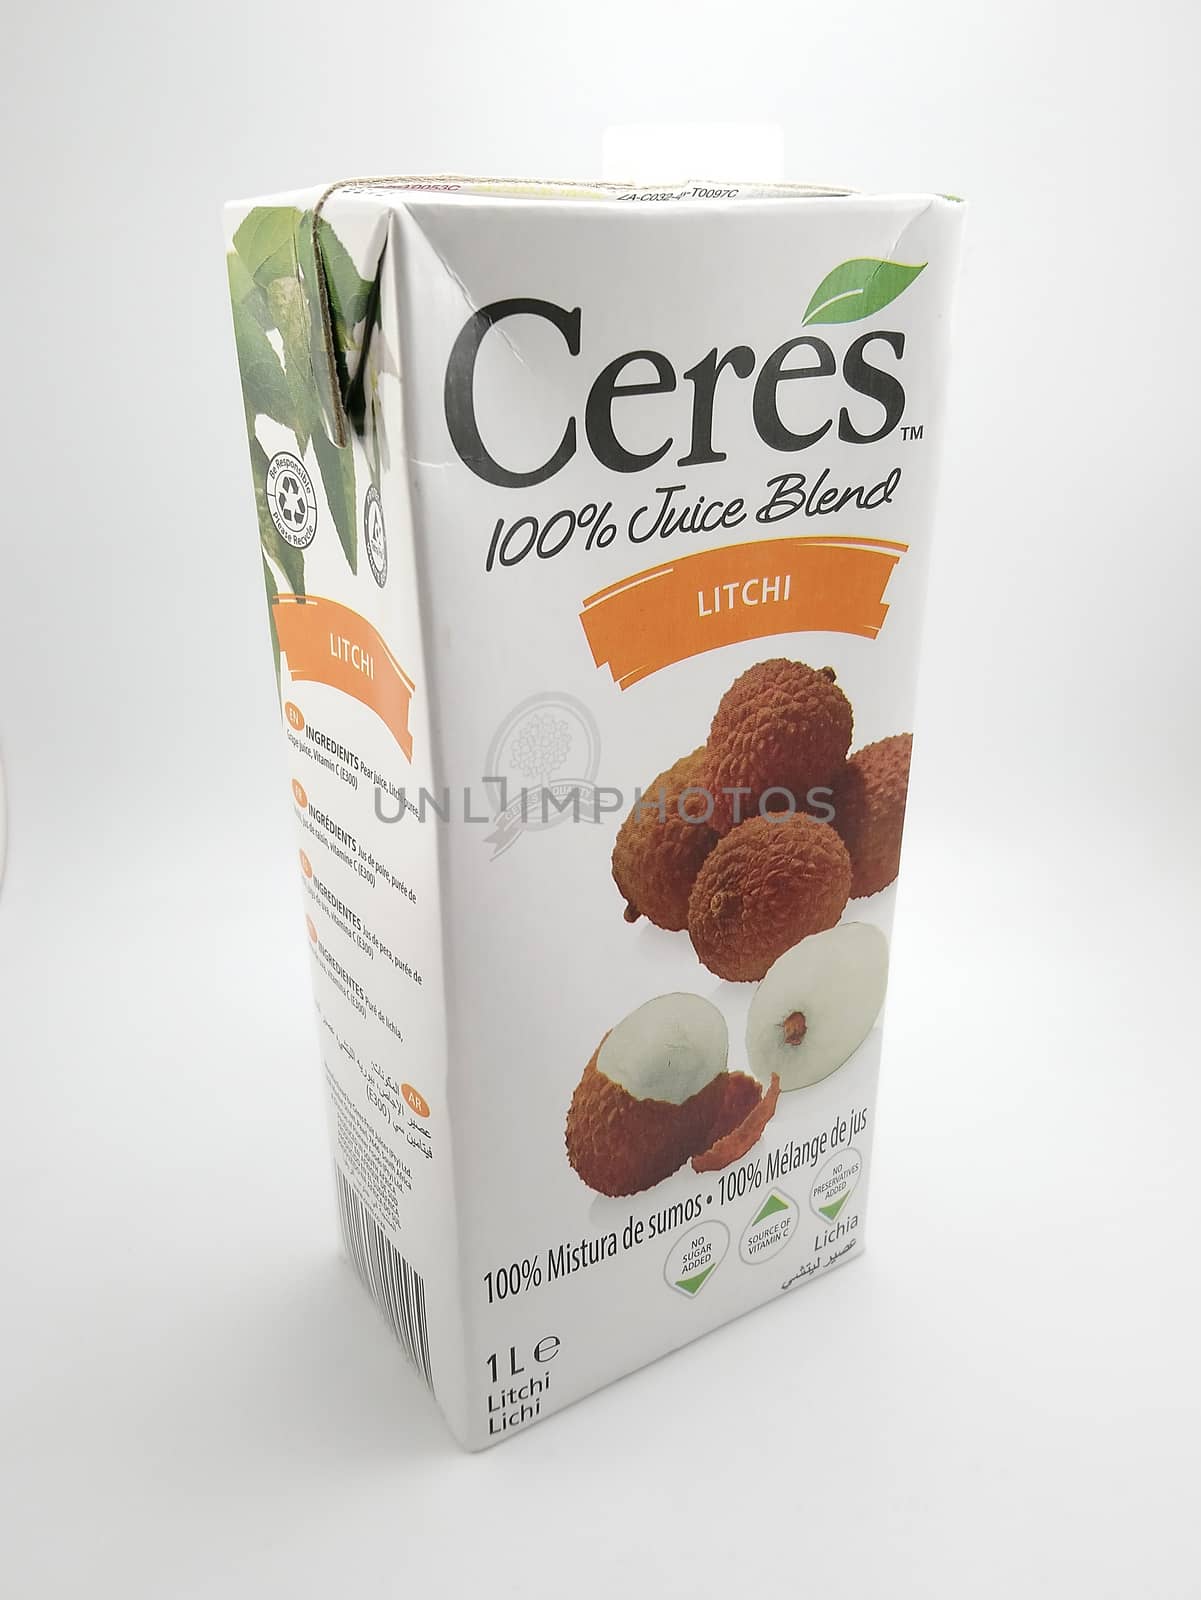 MANILA, PH - SEPT 25 - Ceres lychee juice on September 25, 2020 in Manila, Philippines.